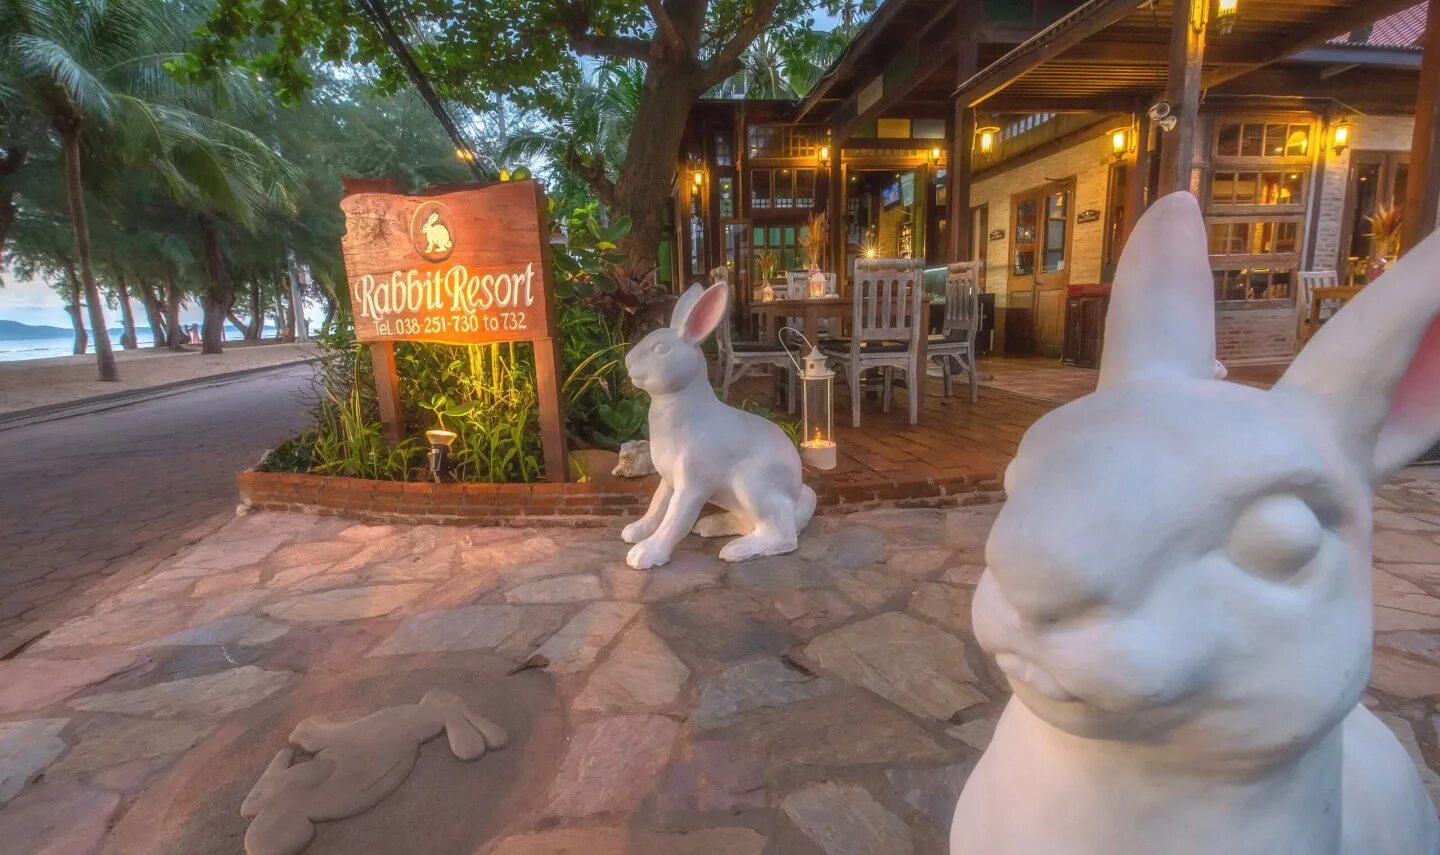 Rabbit hotel